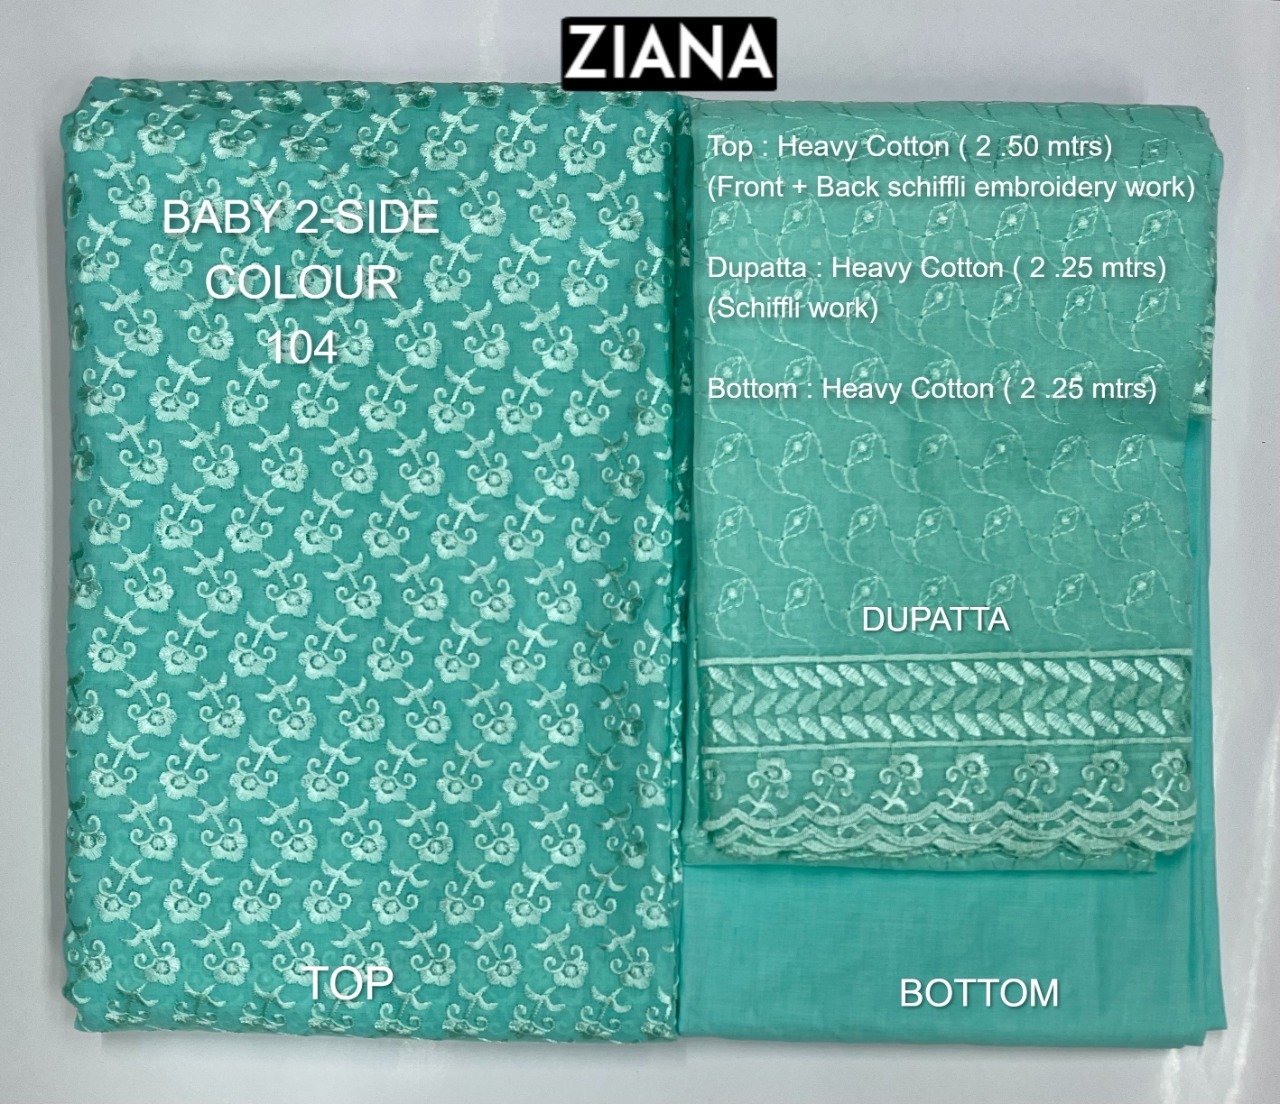 ziana baby 2 side colour 104 heavy cotton exclusive embroidery salwar suit colour set